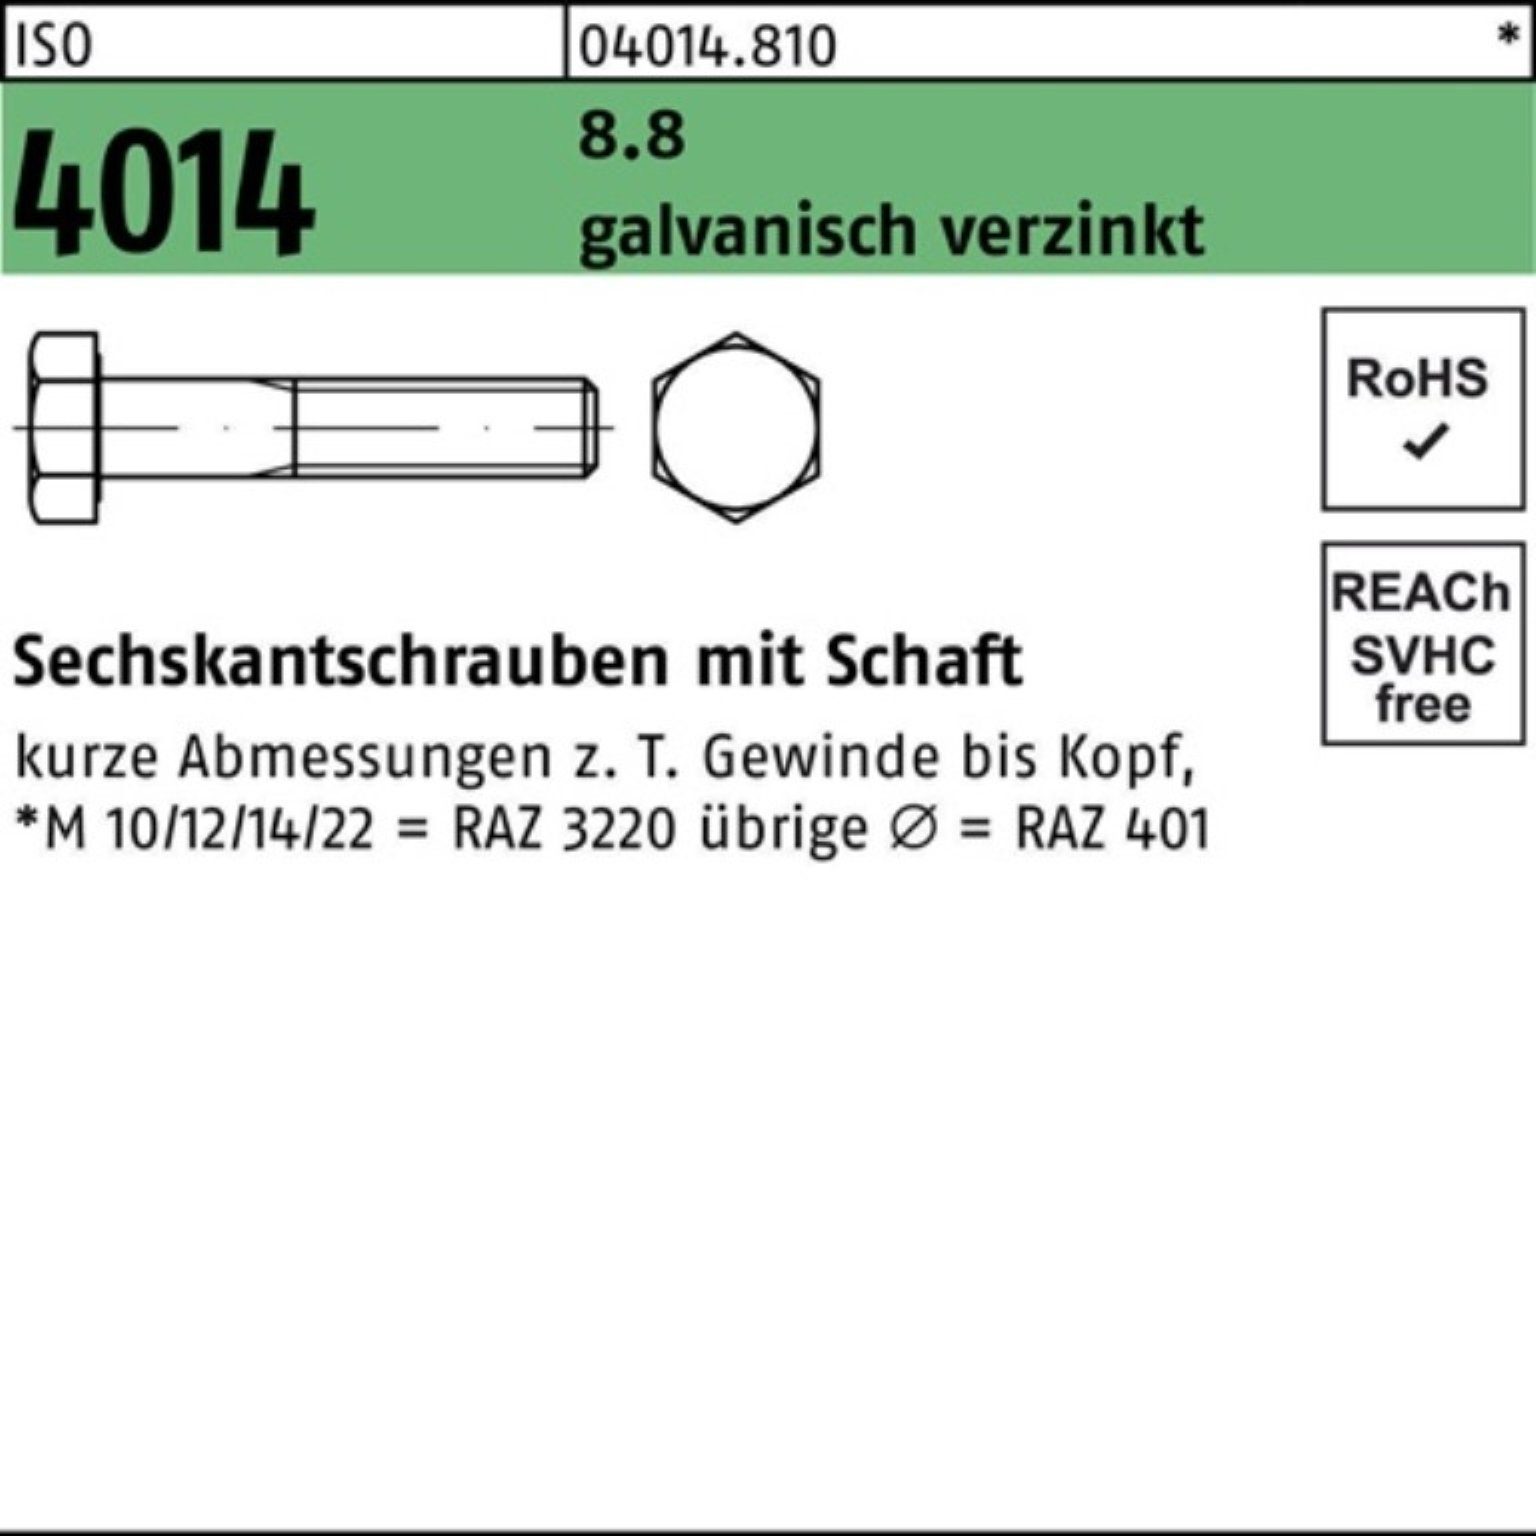 Bufab Sechskantschraube 200er Pack Sechskantschraube ISO 4014 Schaft M5x 100 8.8 galv.verz. 20 | Schrauben